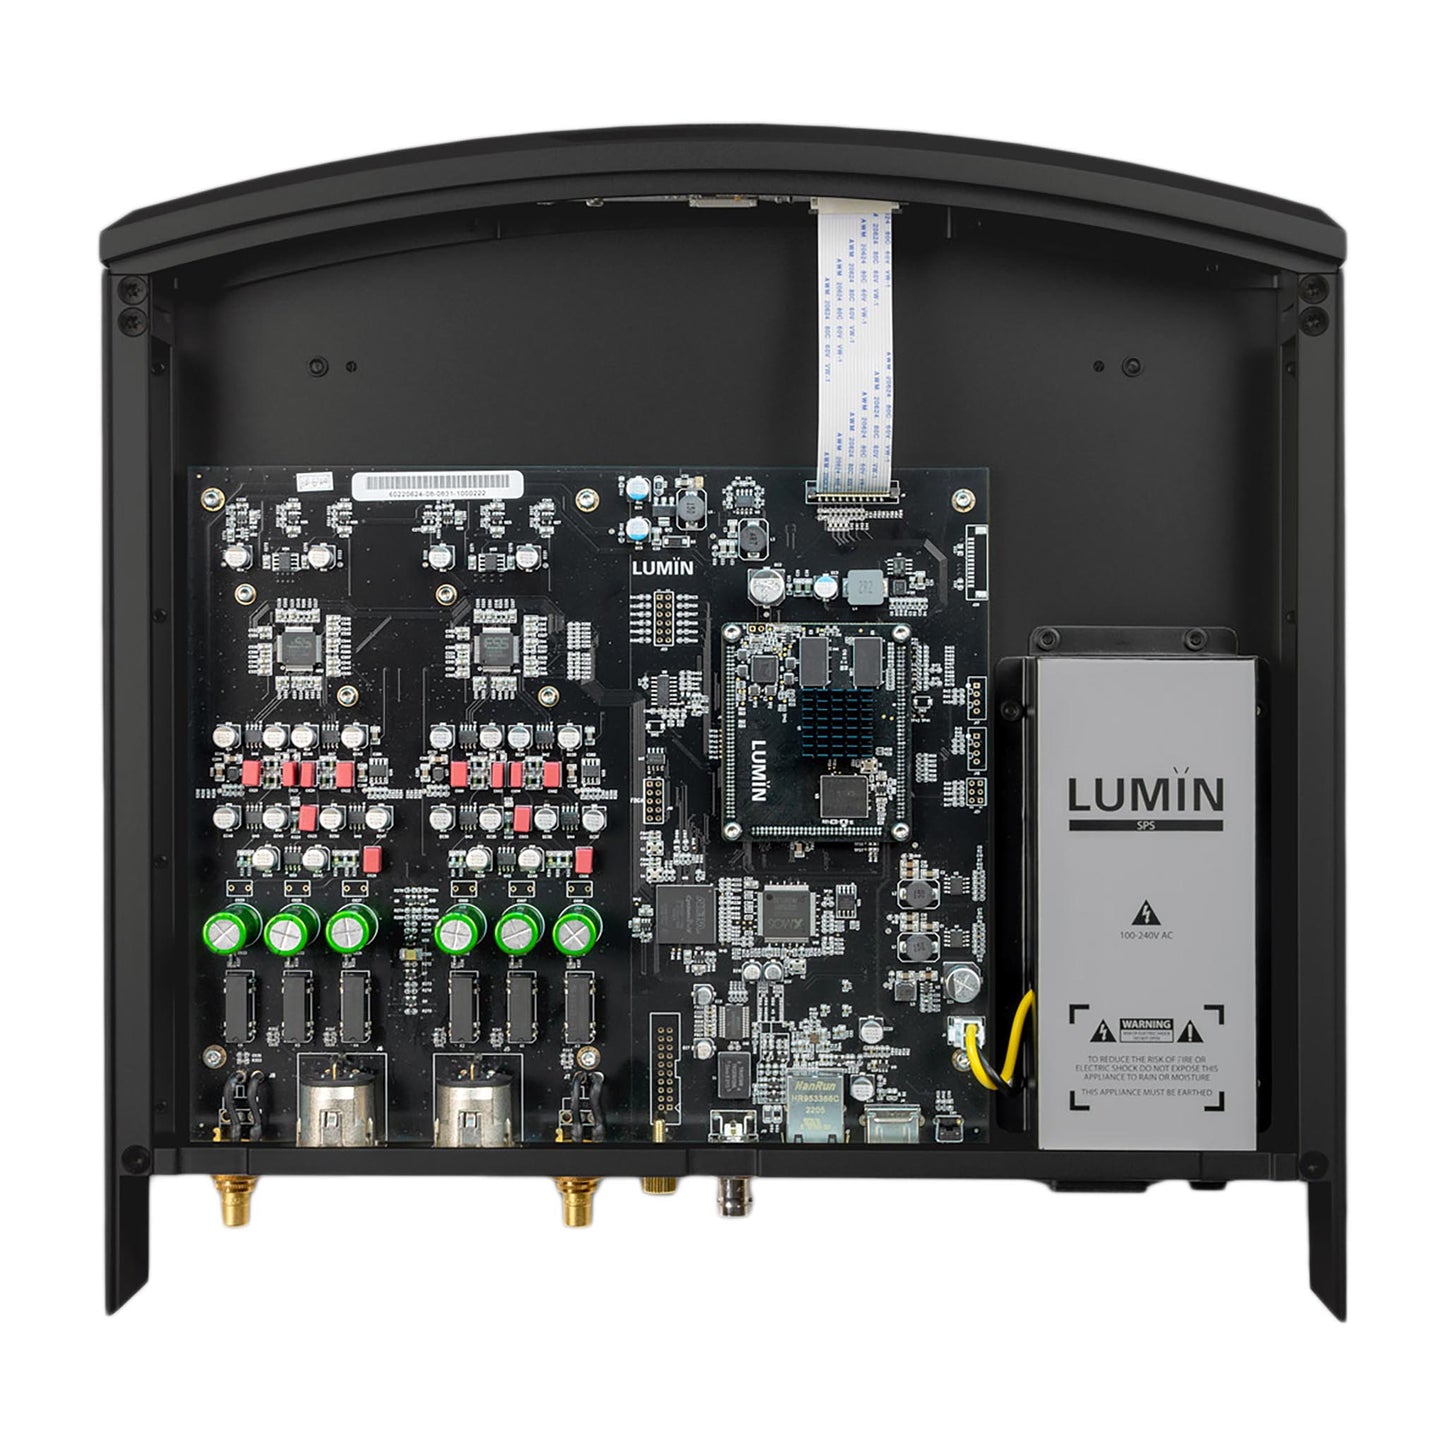 Lumin T3 Streamer - Inside view